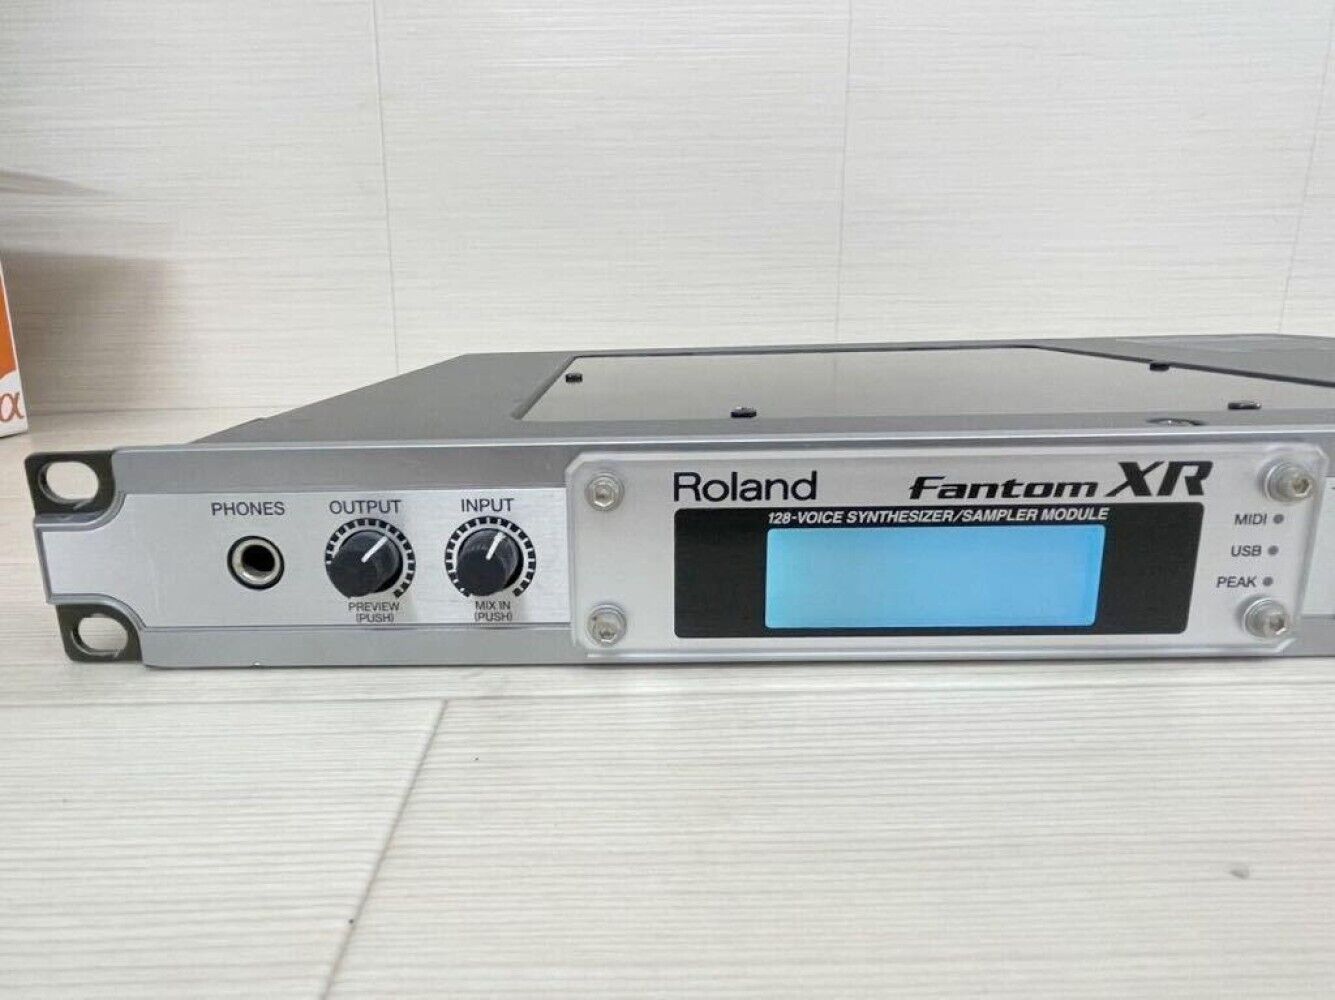 ROLAND FANTOM-XR Synth Sampler Rack Sound Module 128-Voice Confirmed as is